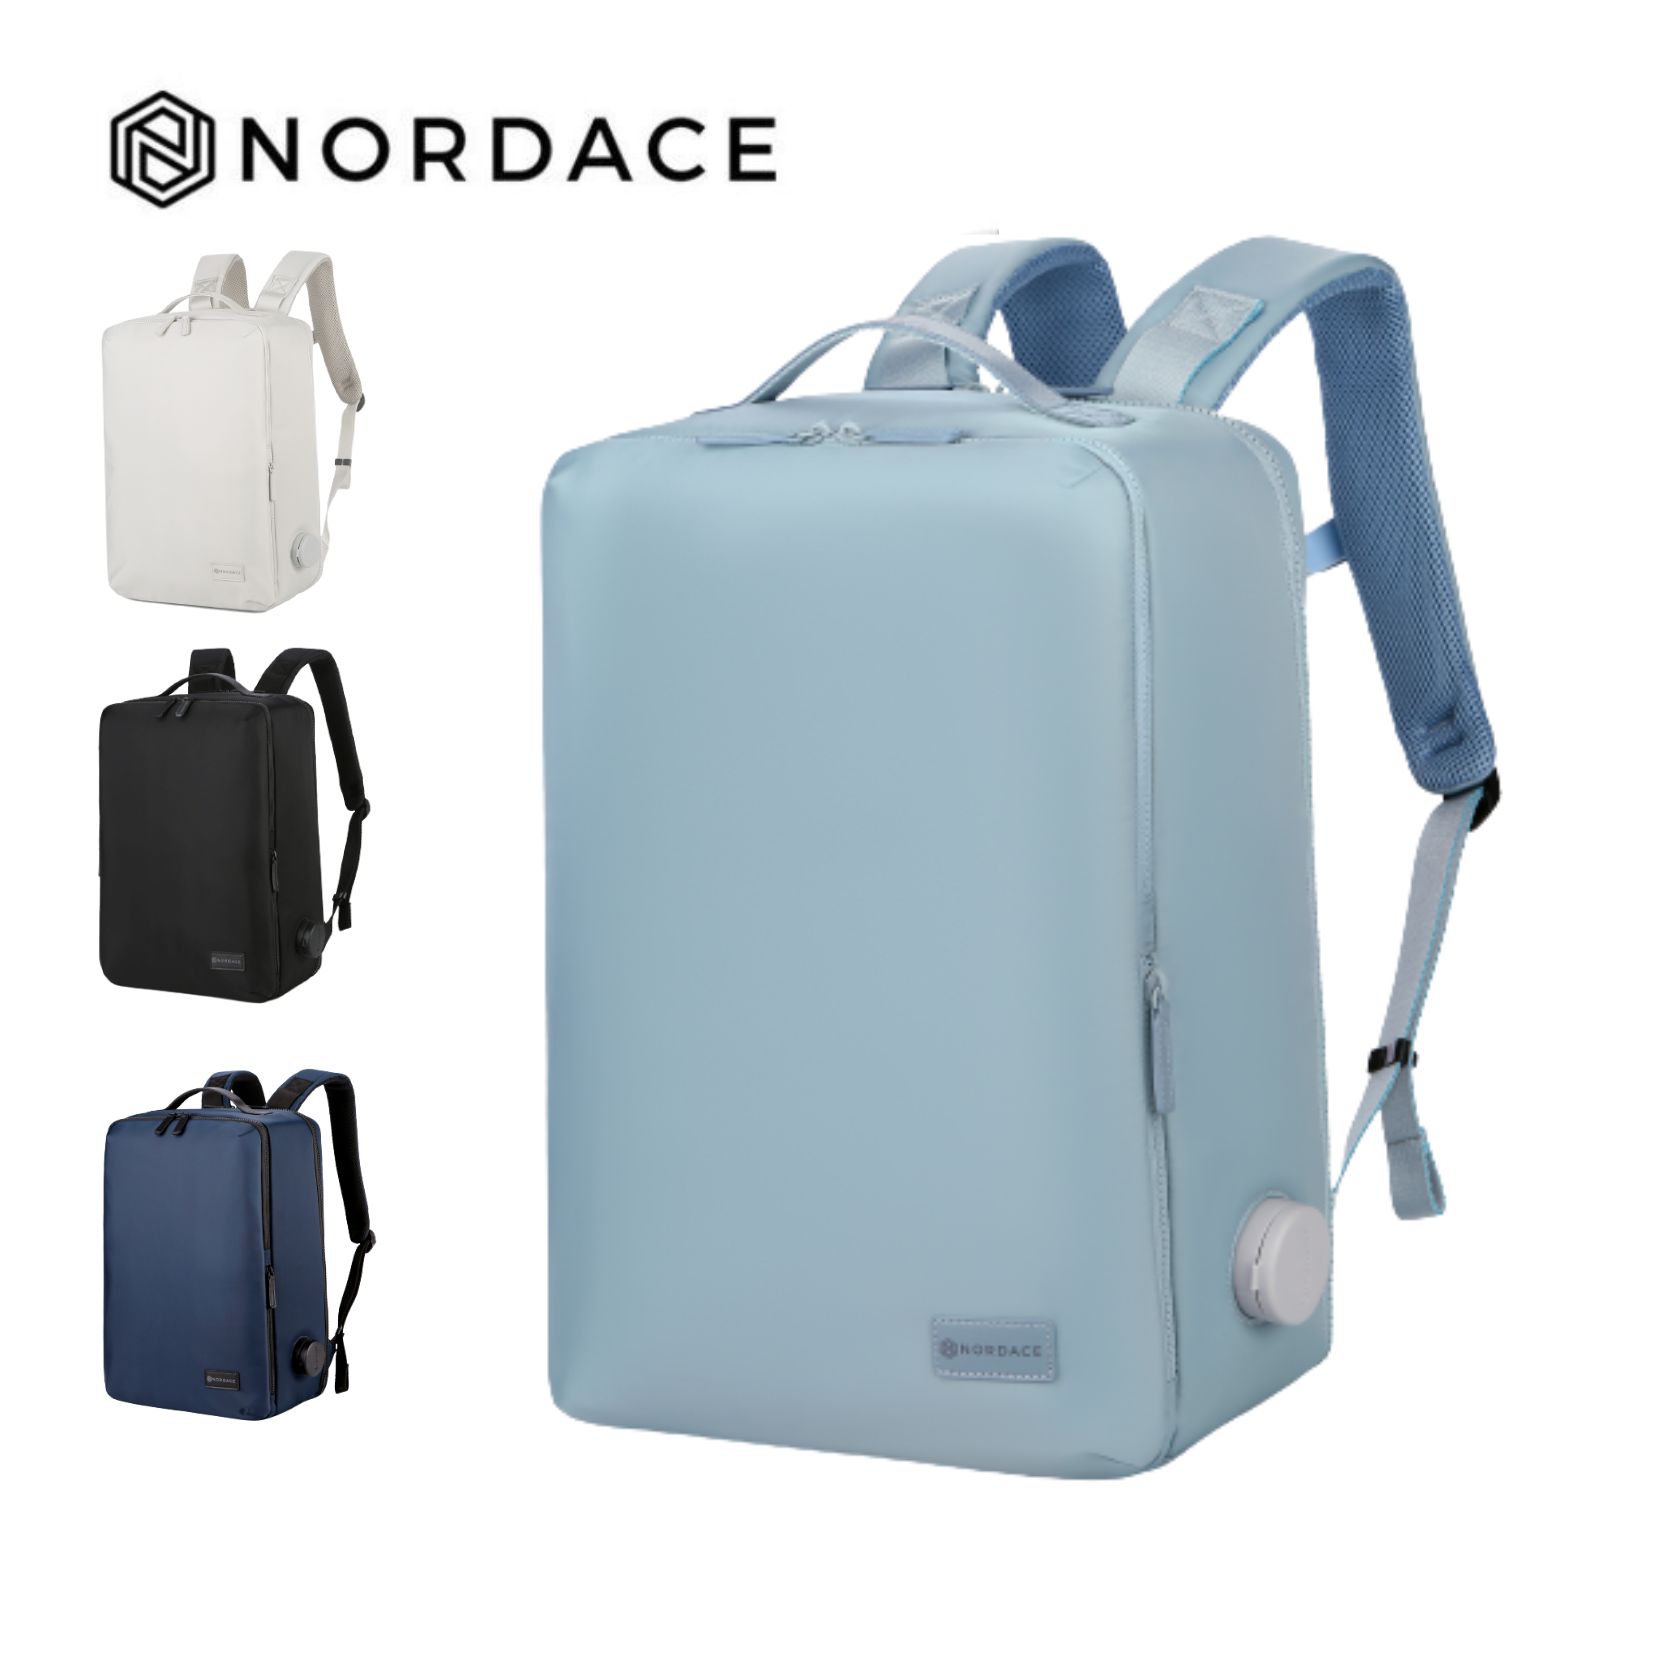 Nordace Laval- 後背包 斜背包 手提包 胸包 側背包 旅行包 工作包 四色任選-天藍色